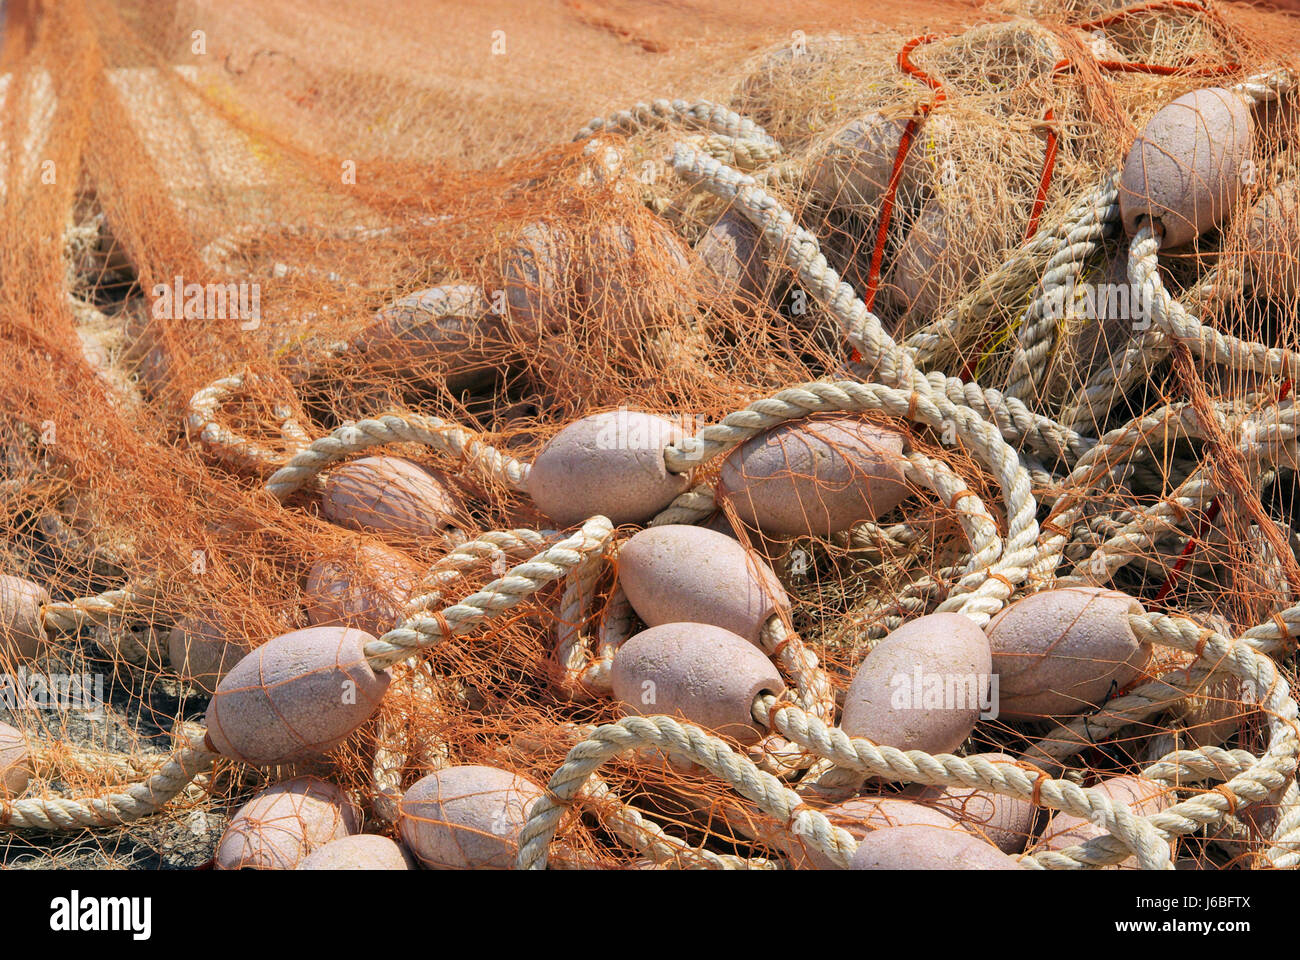 angle fish net fisherman mesh fishnet fishing net coloured colourful gorgeous Stock Photo